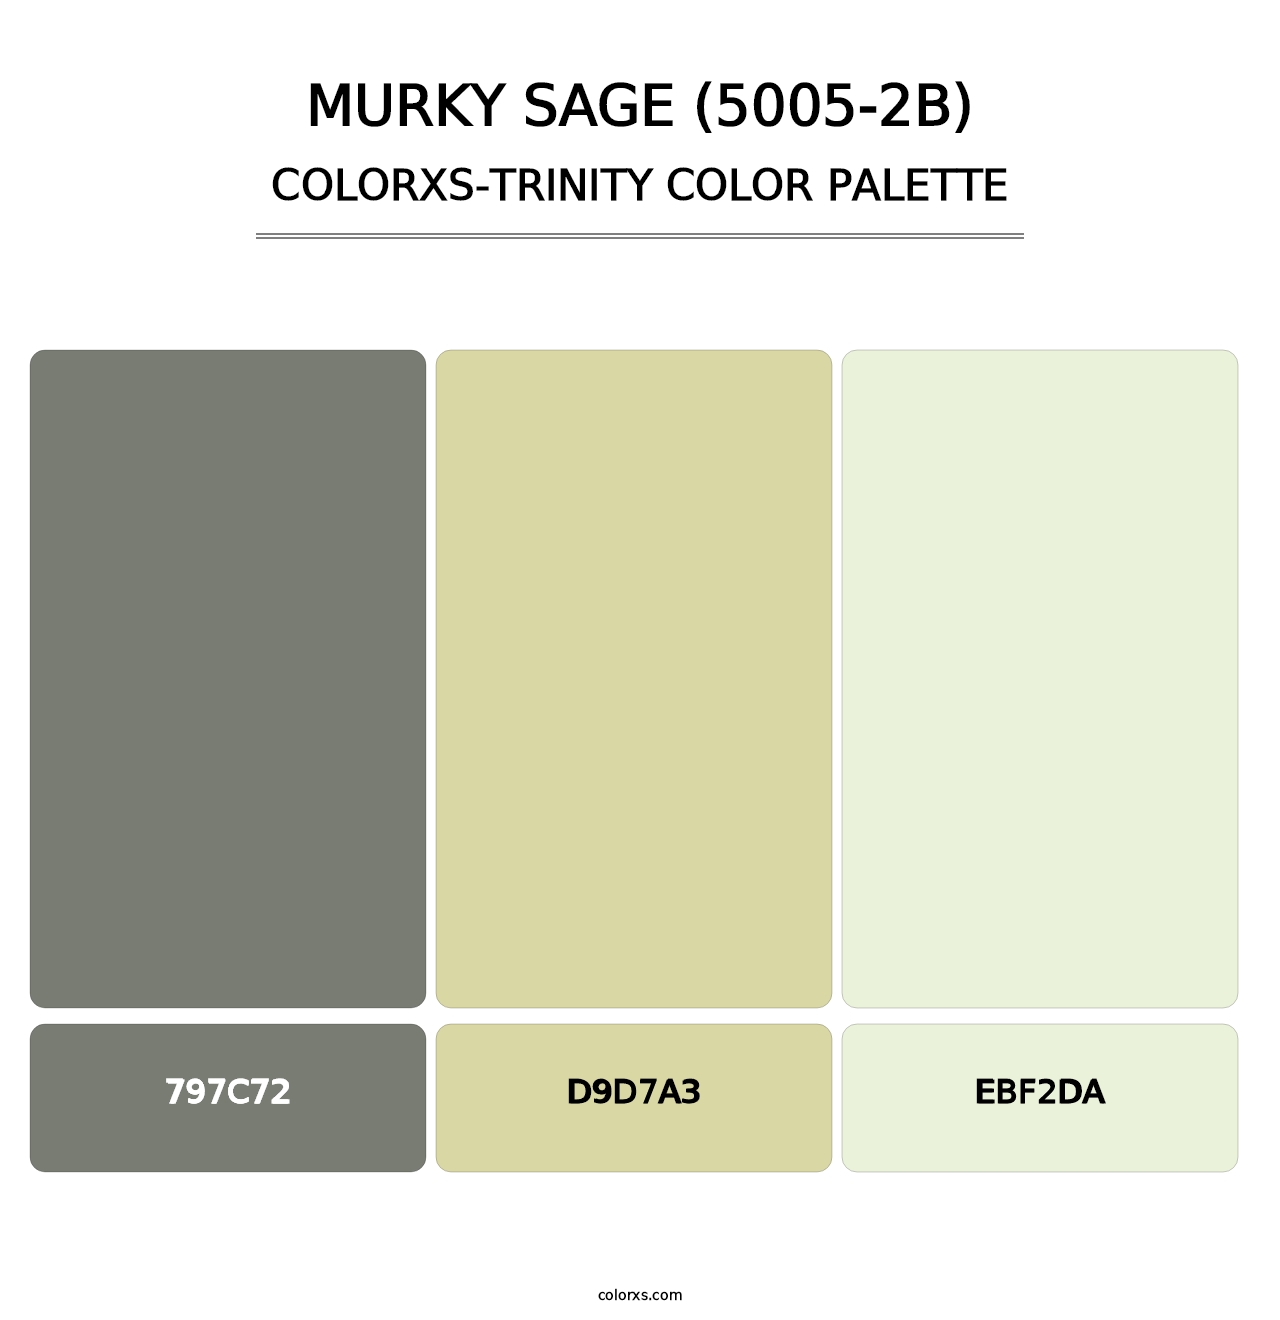 Murky Sage (5005-2B) - Colorxs Trinity Palette